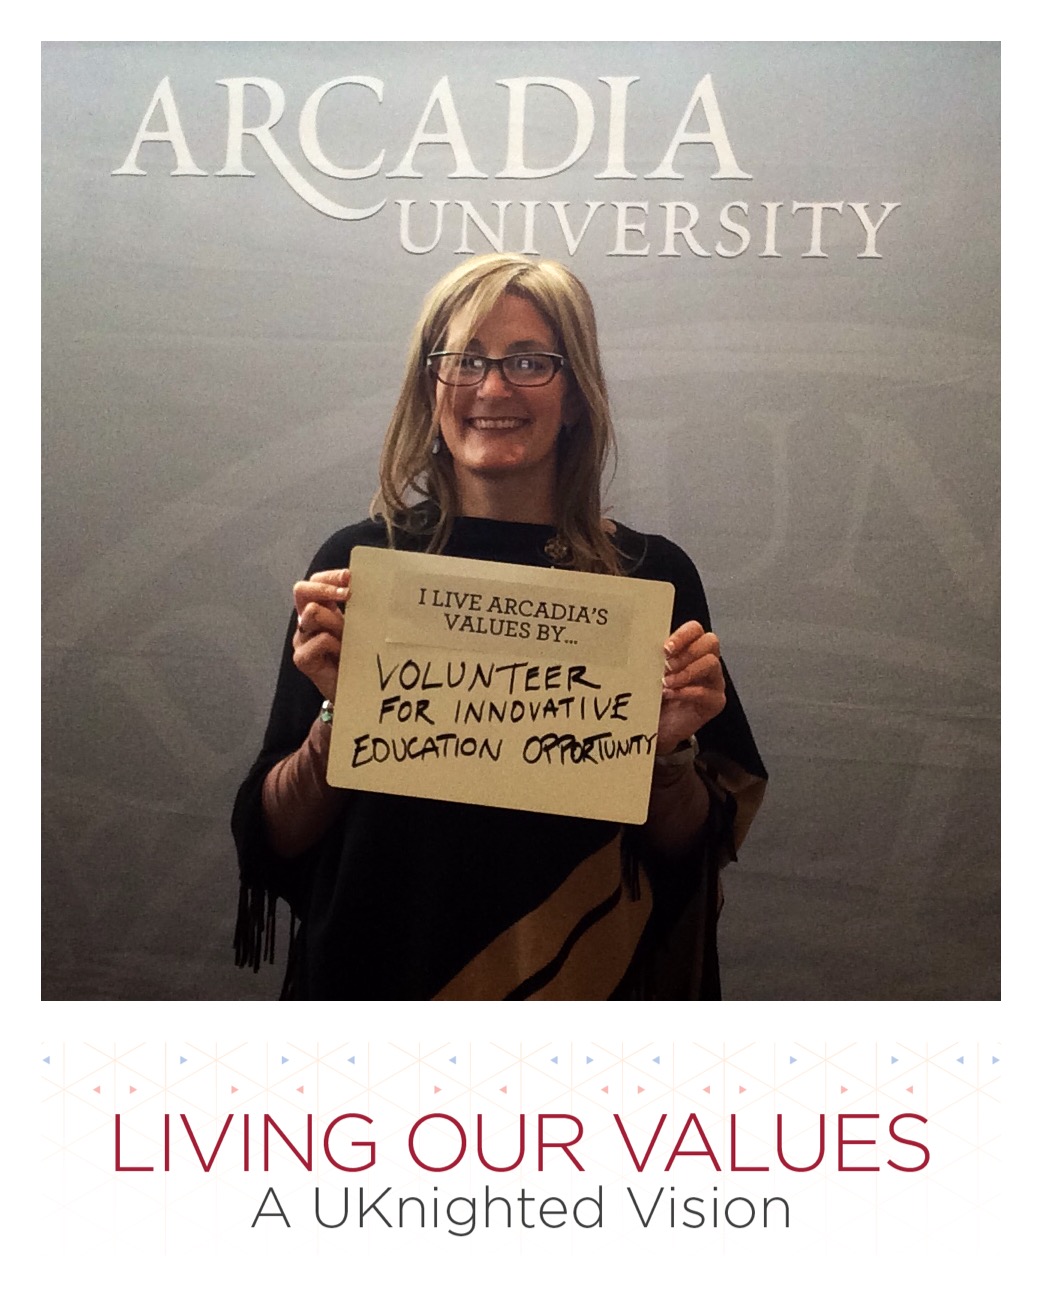 A woman faculty member shows Arcadia's value through volunteering.